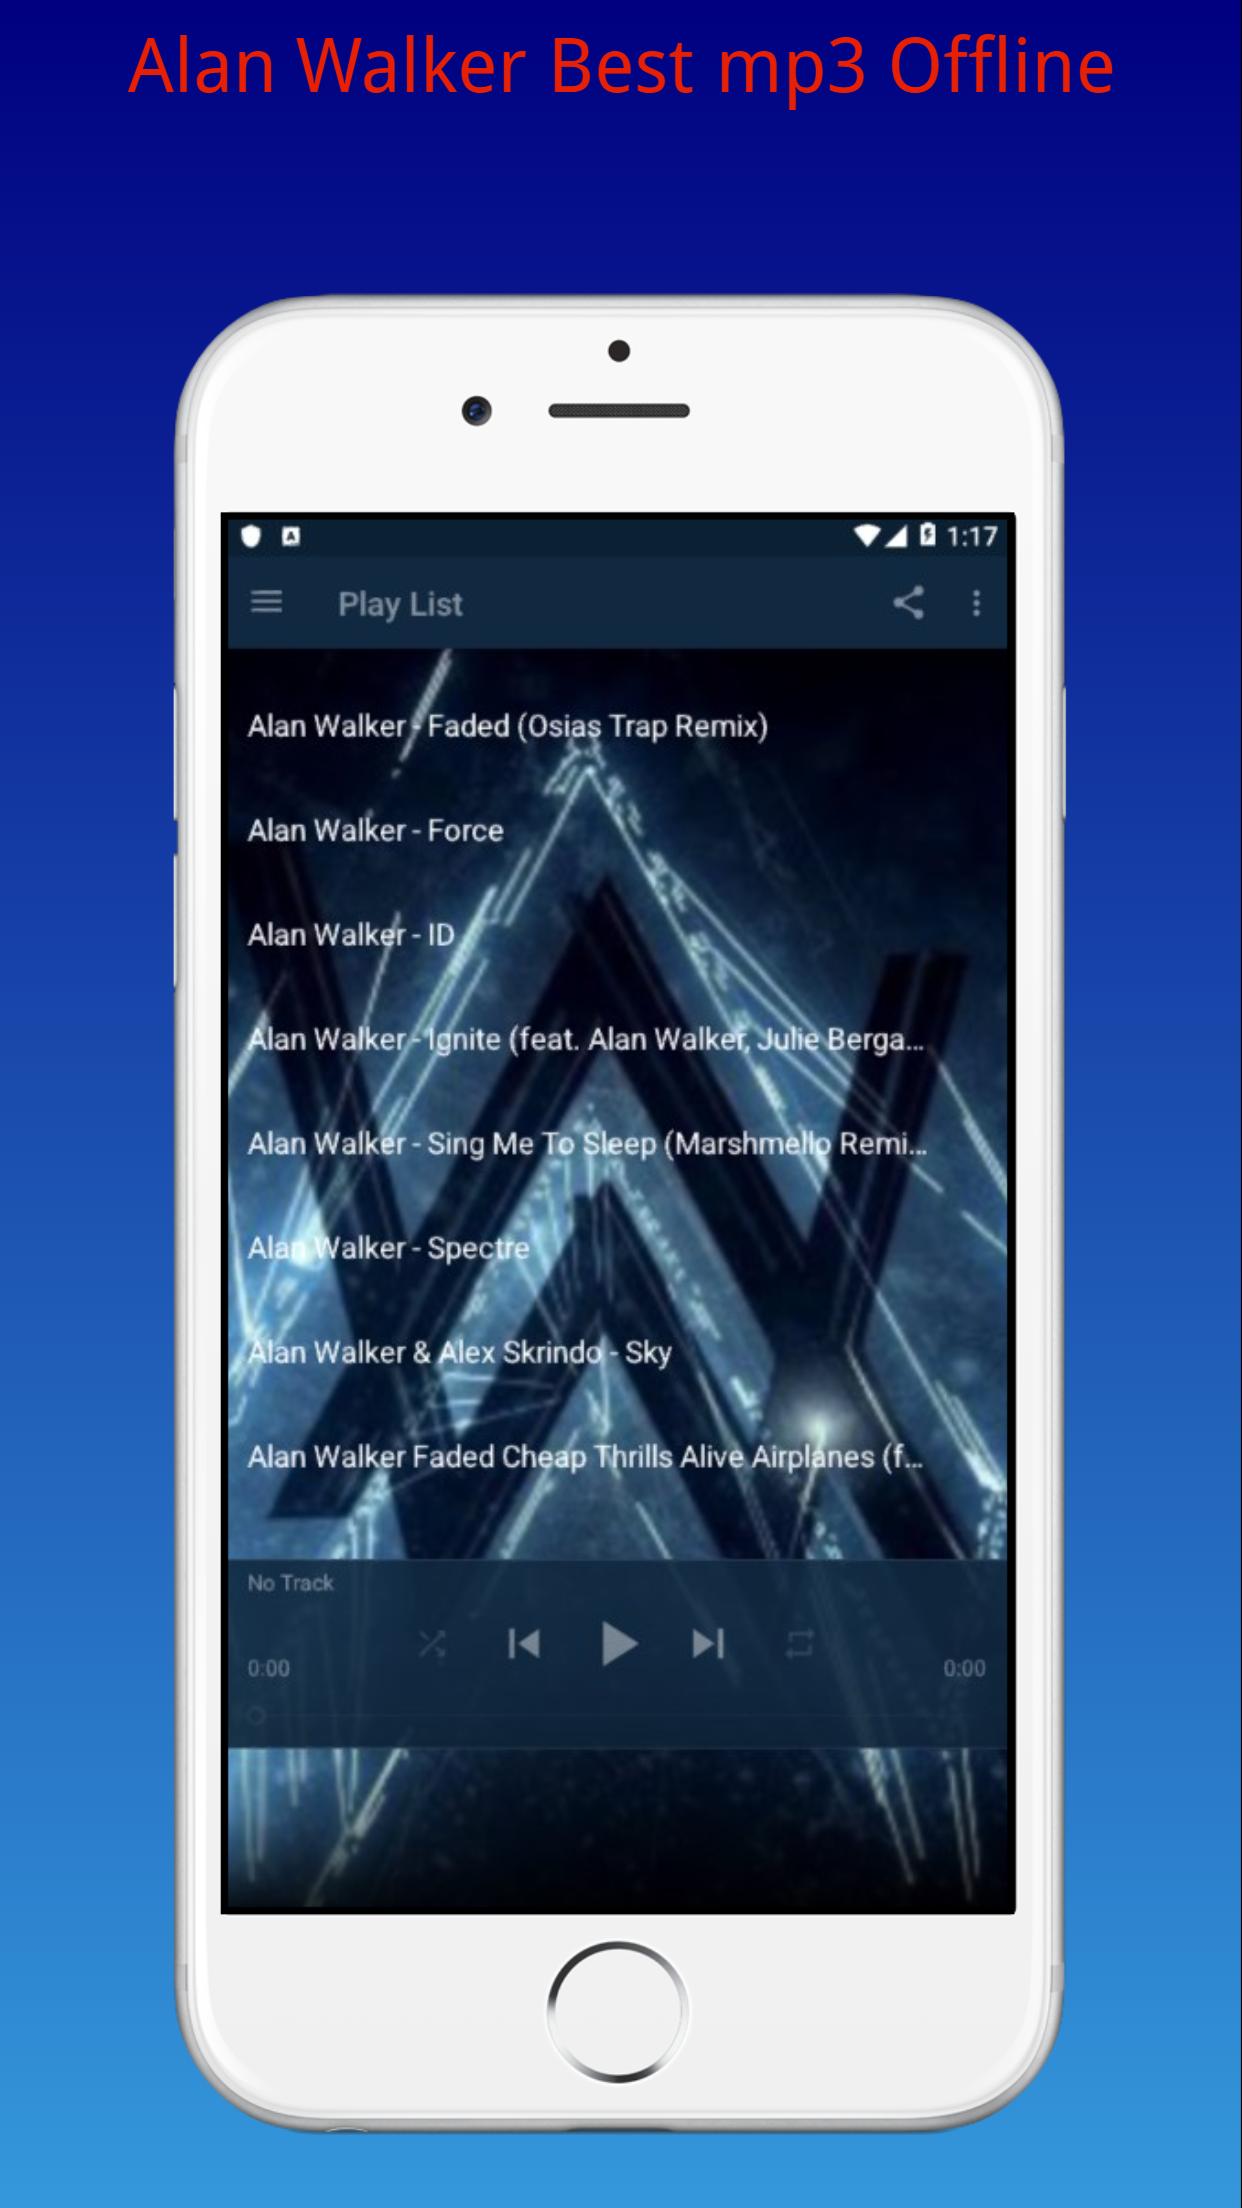 Alan Walker Best Mp3 Offline For Android Apk Download - alan walker song ids for roblox mp3 download